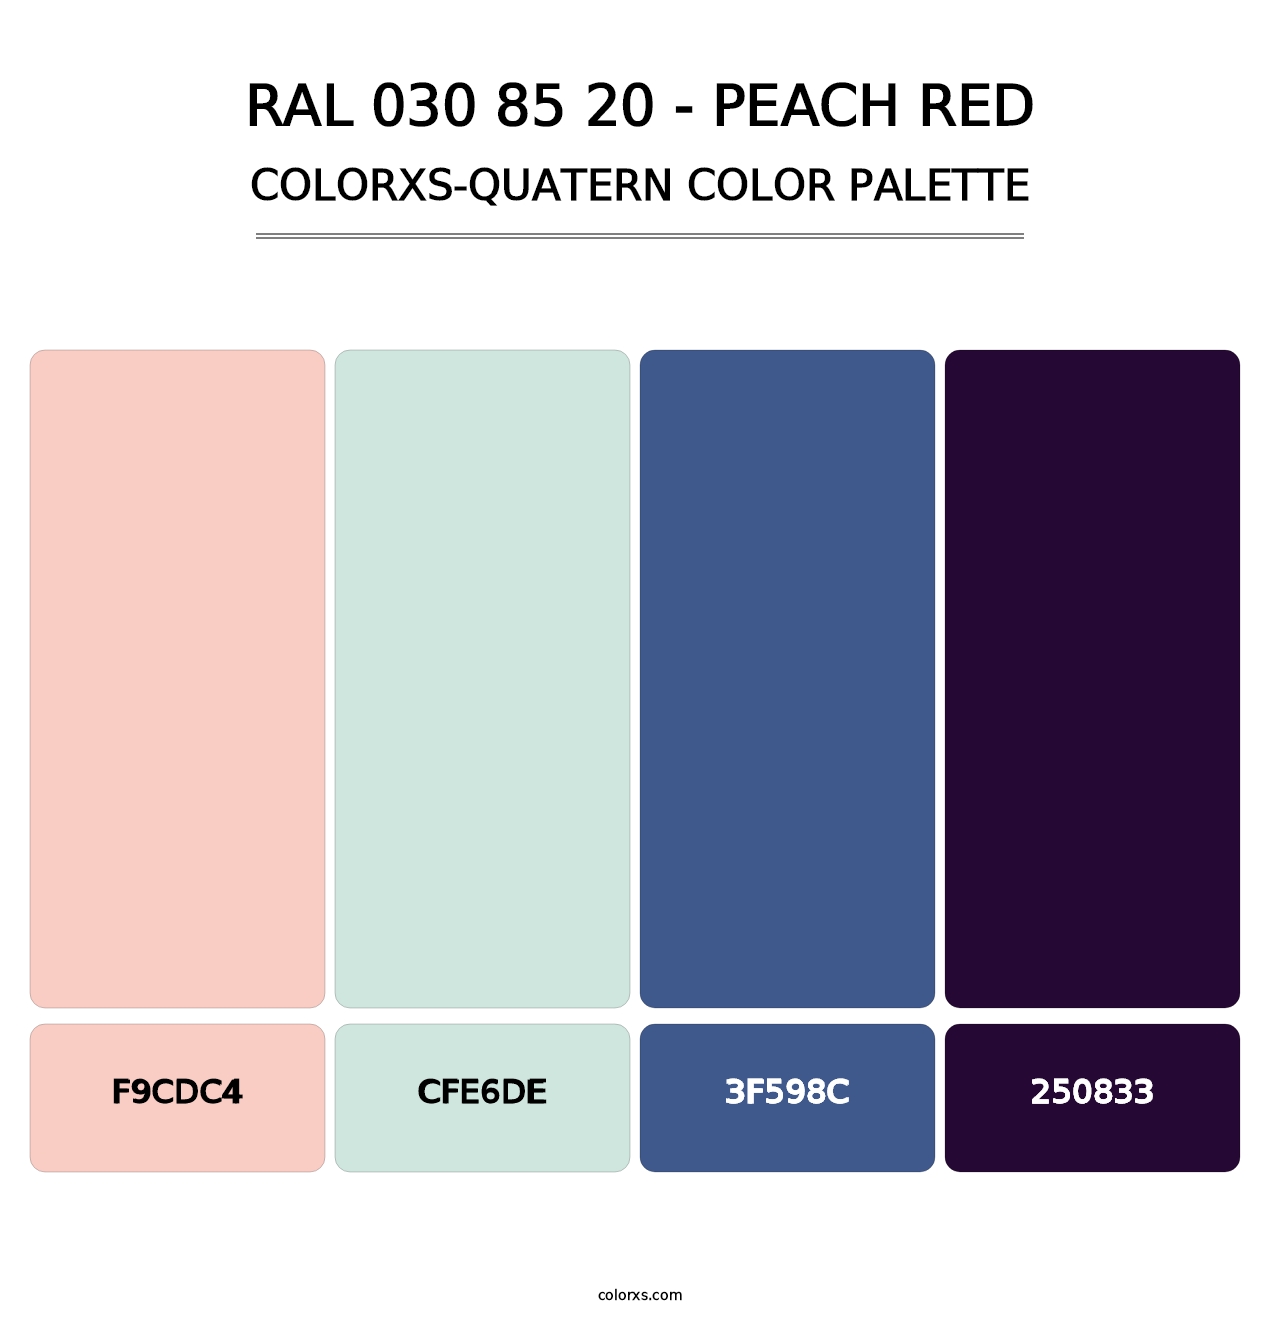 RAL 030 85 20 - Peach Red - Colorxs Quatern Palette